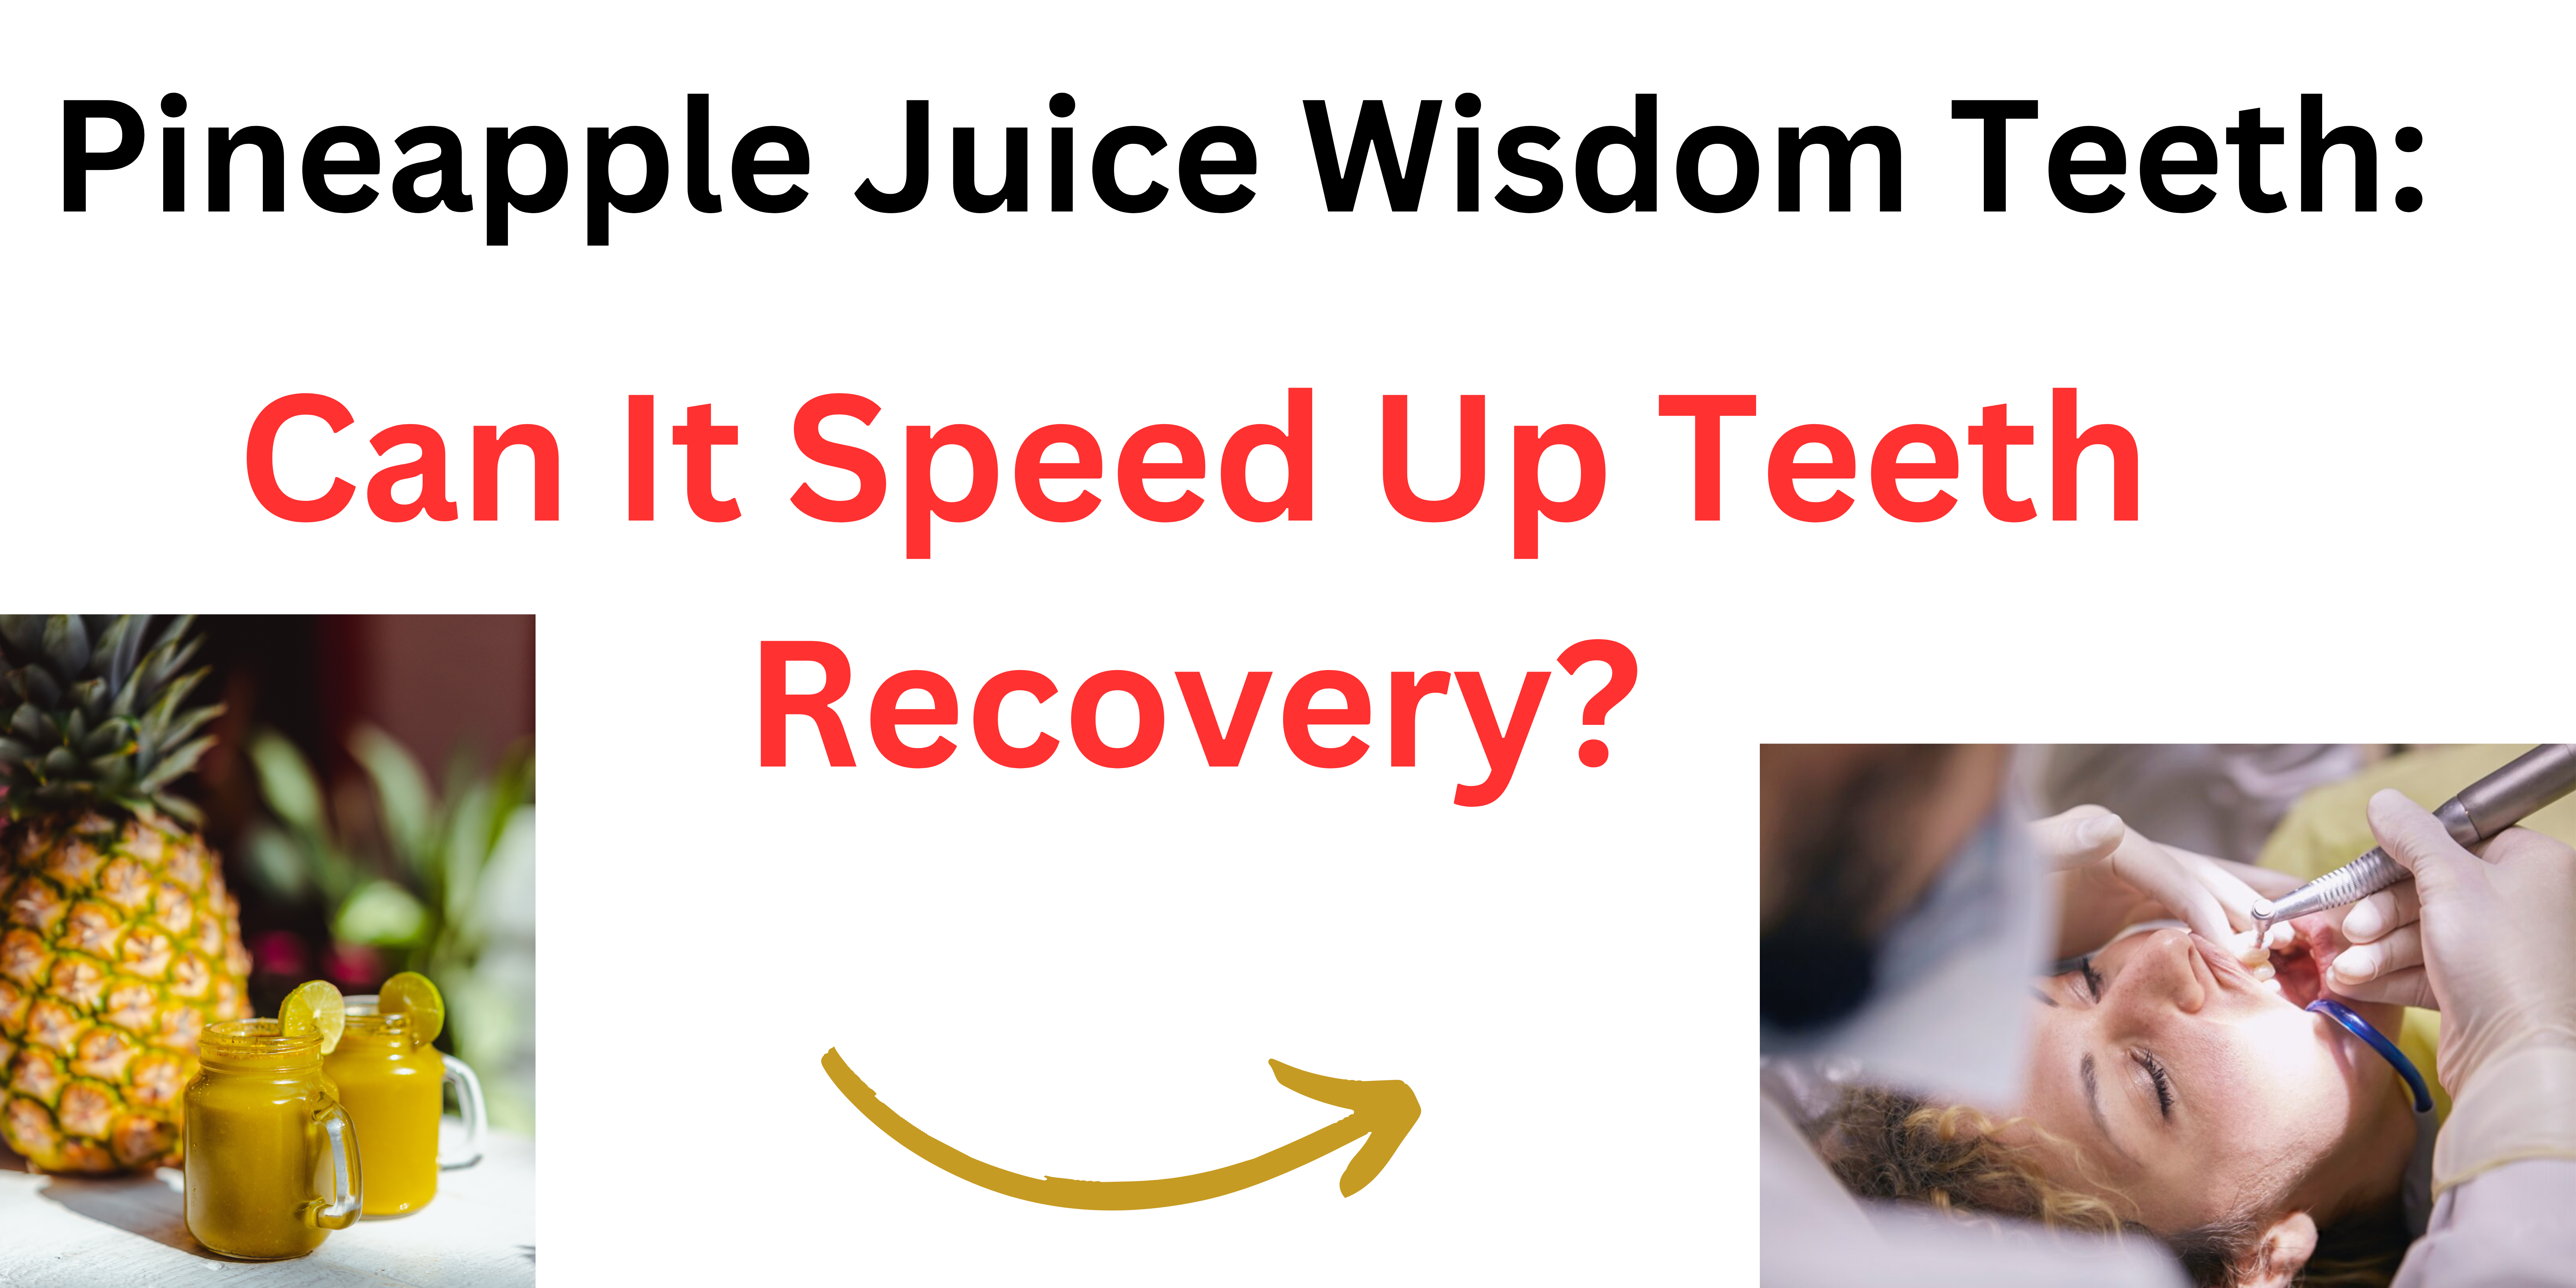 Pineapple Juice Wisdom Teeth: Can It Speed Up Teeth Recovery?